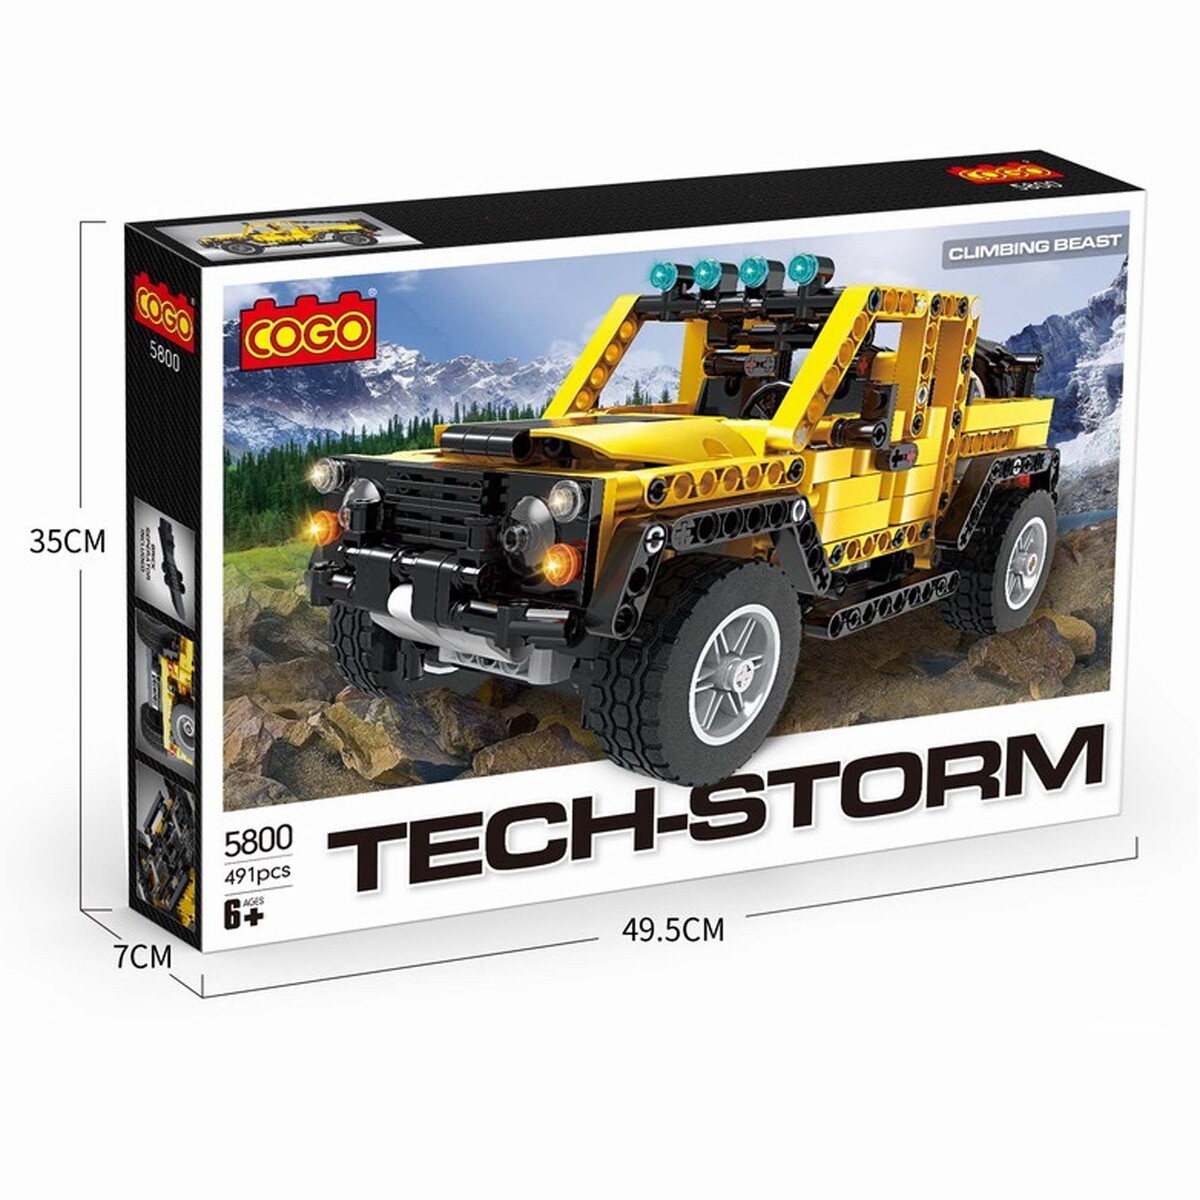 Skid Fusion Jeep Building Bricks, 491 Pcs, 5800